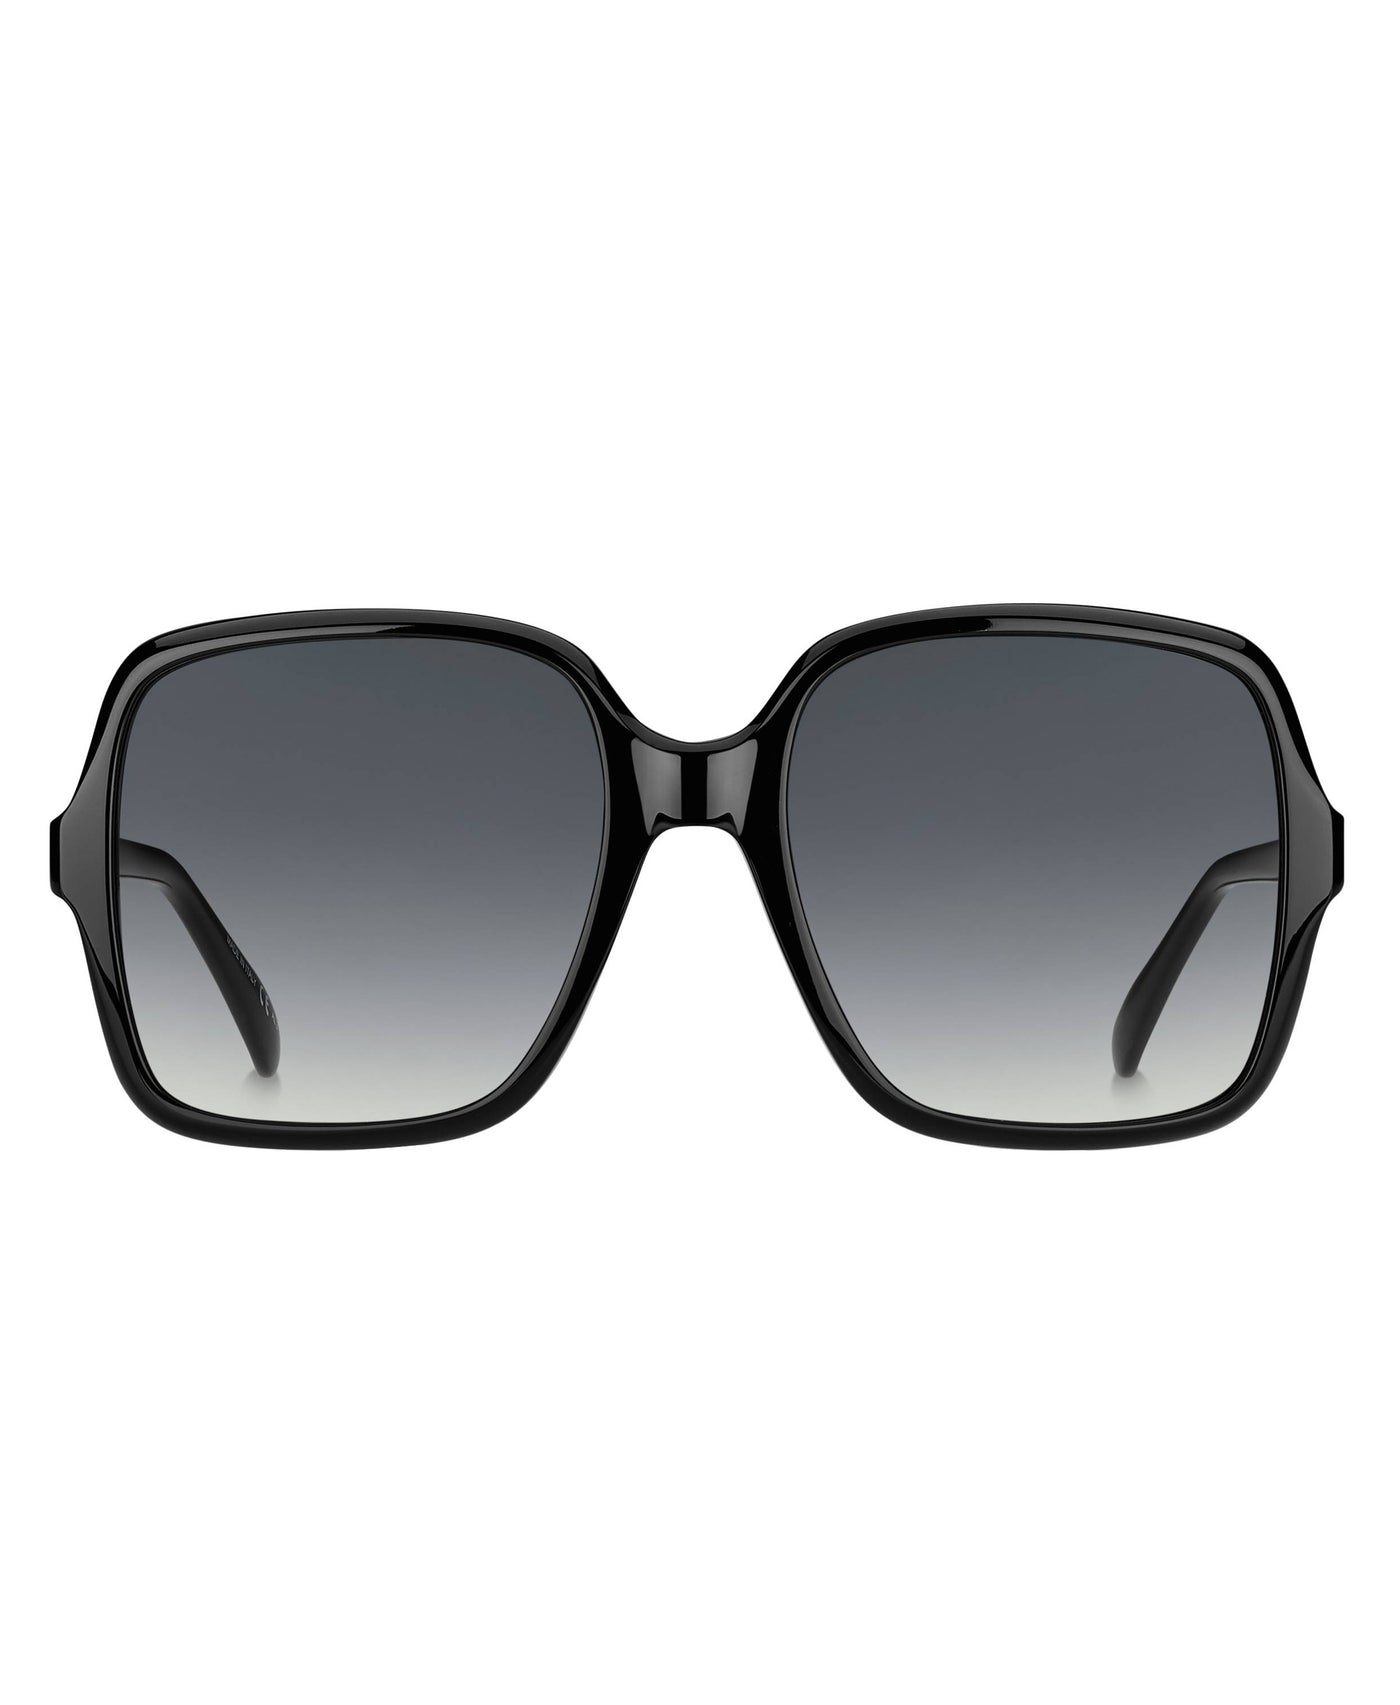 Oversized Square Sunglasses image 1